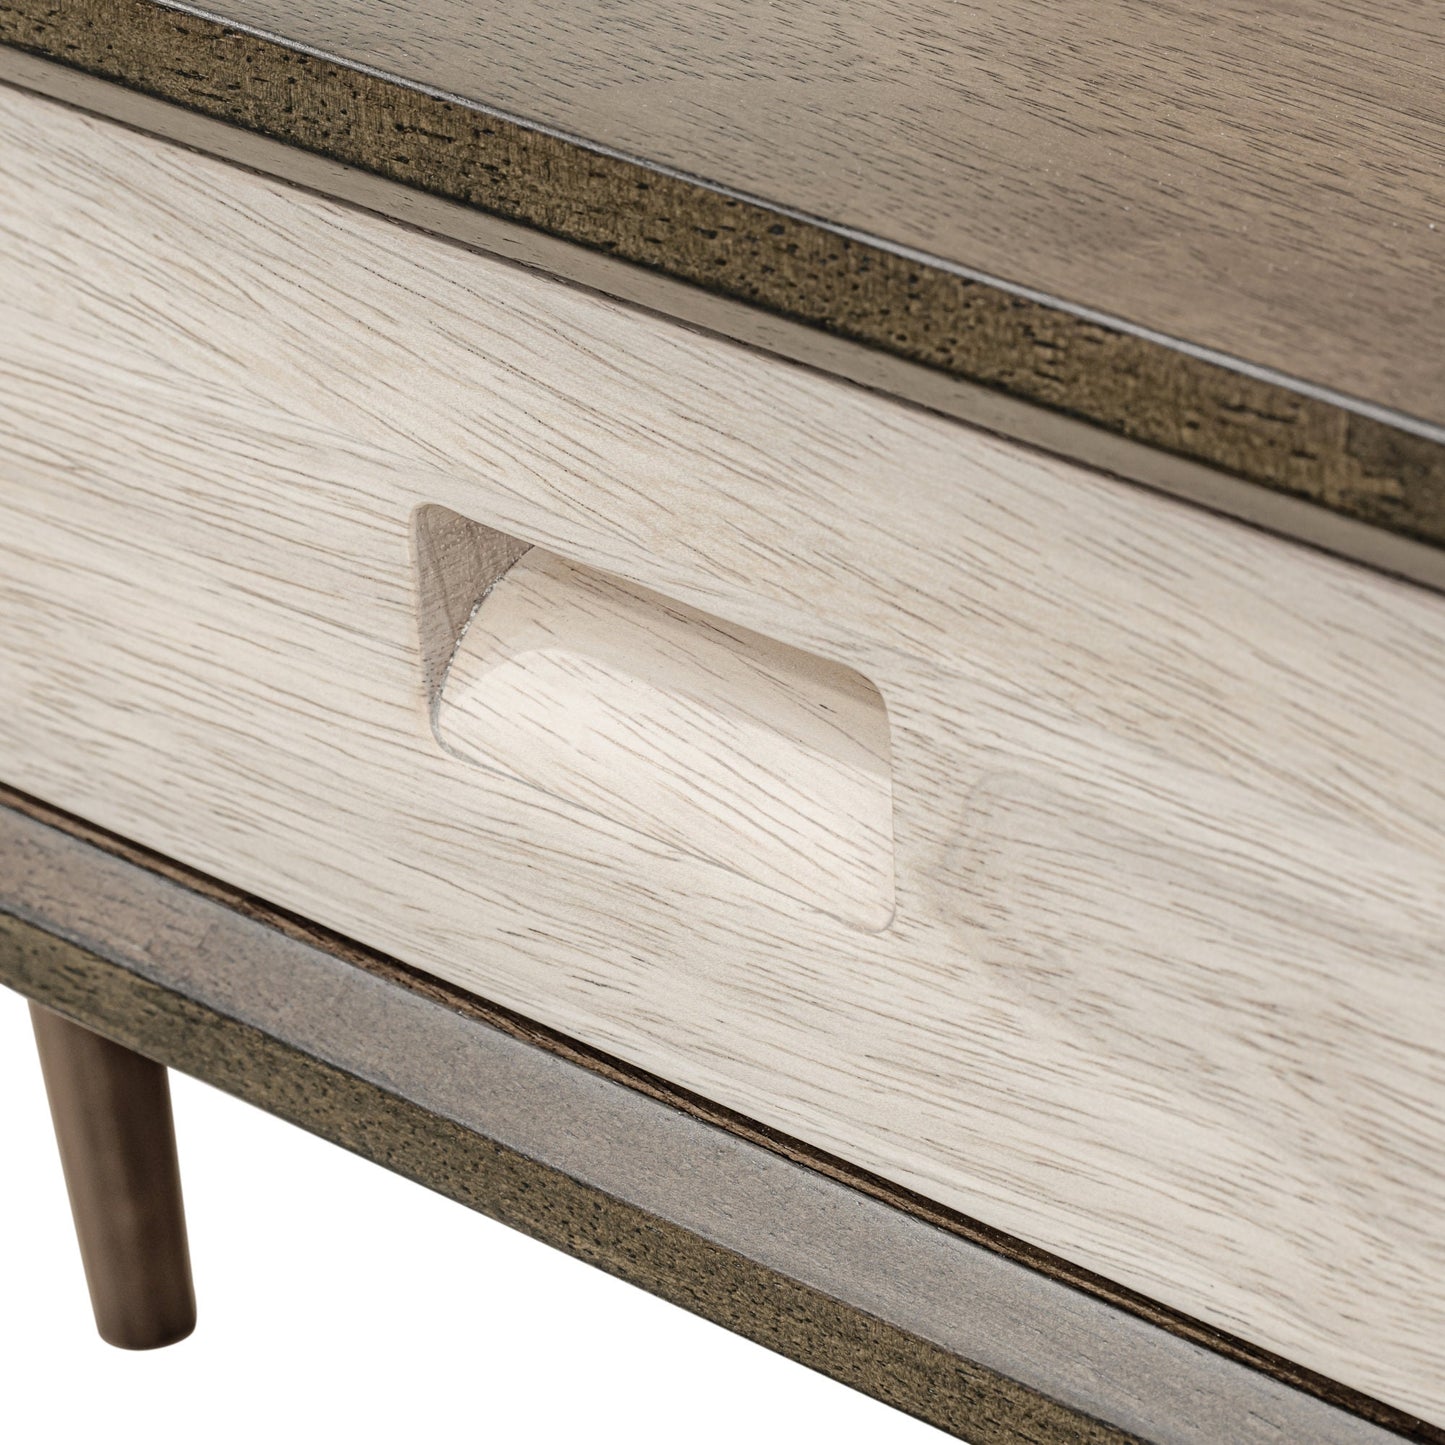 Lulu Wood Desk - Scandinavian Modern Work Desk with Drawers